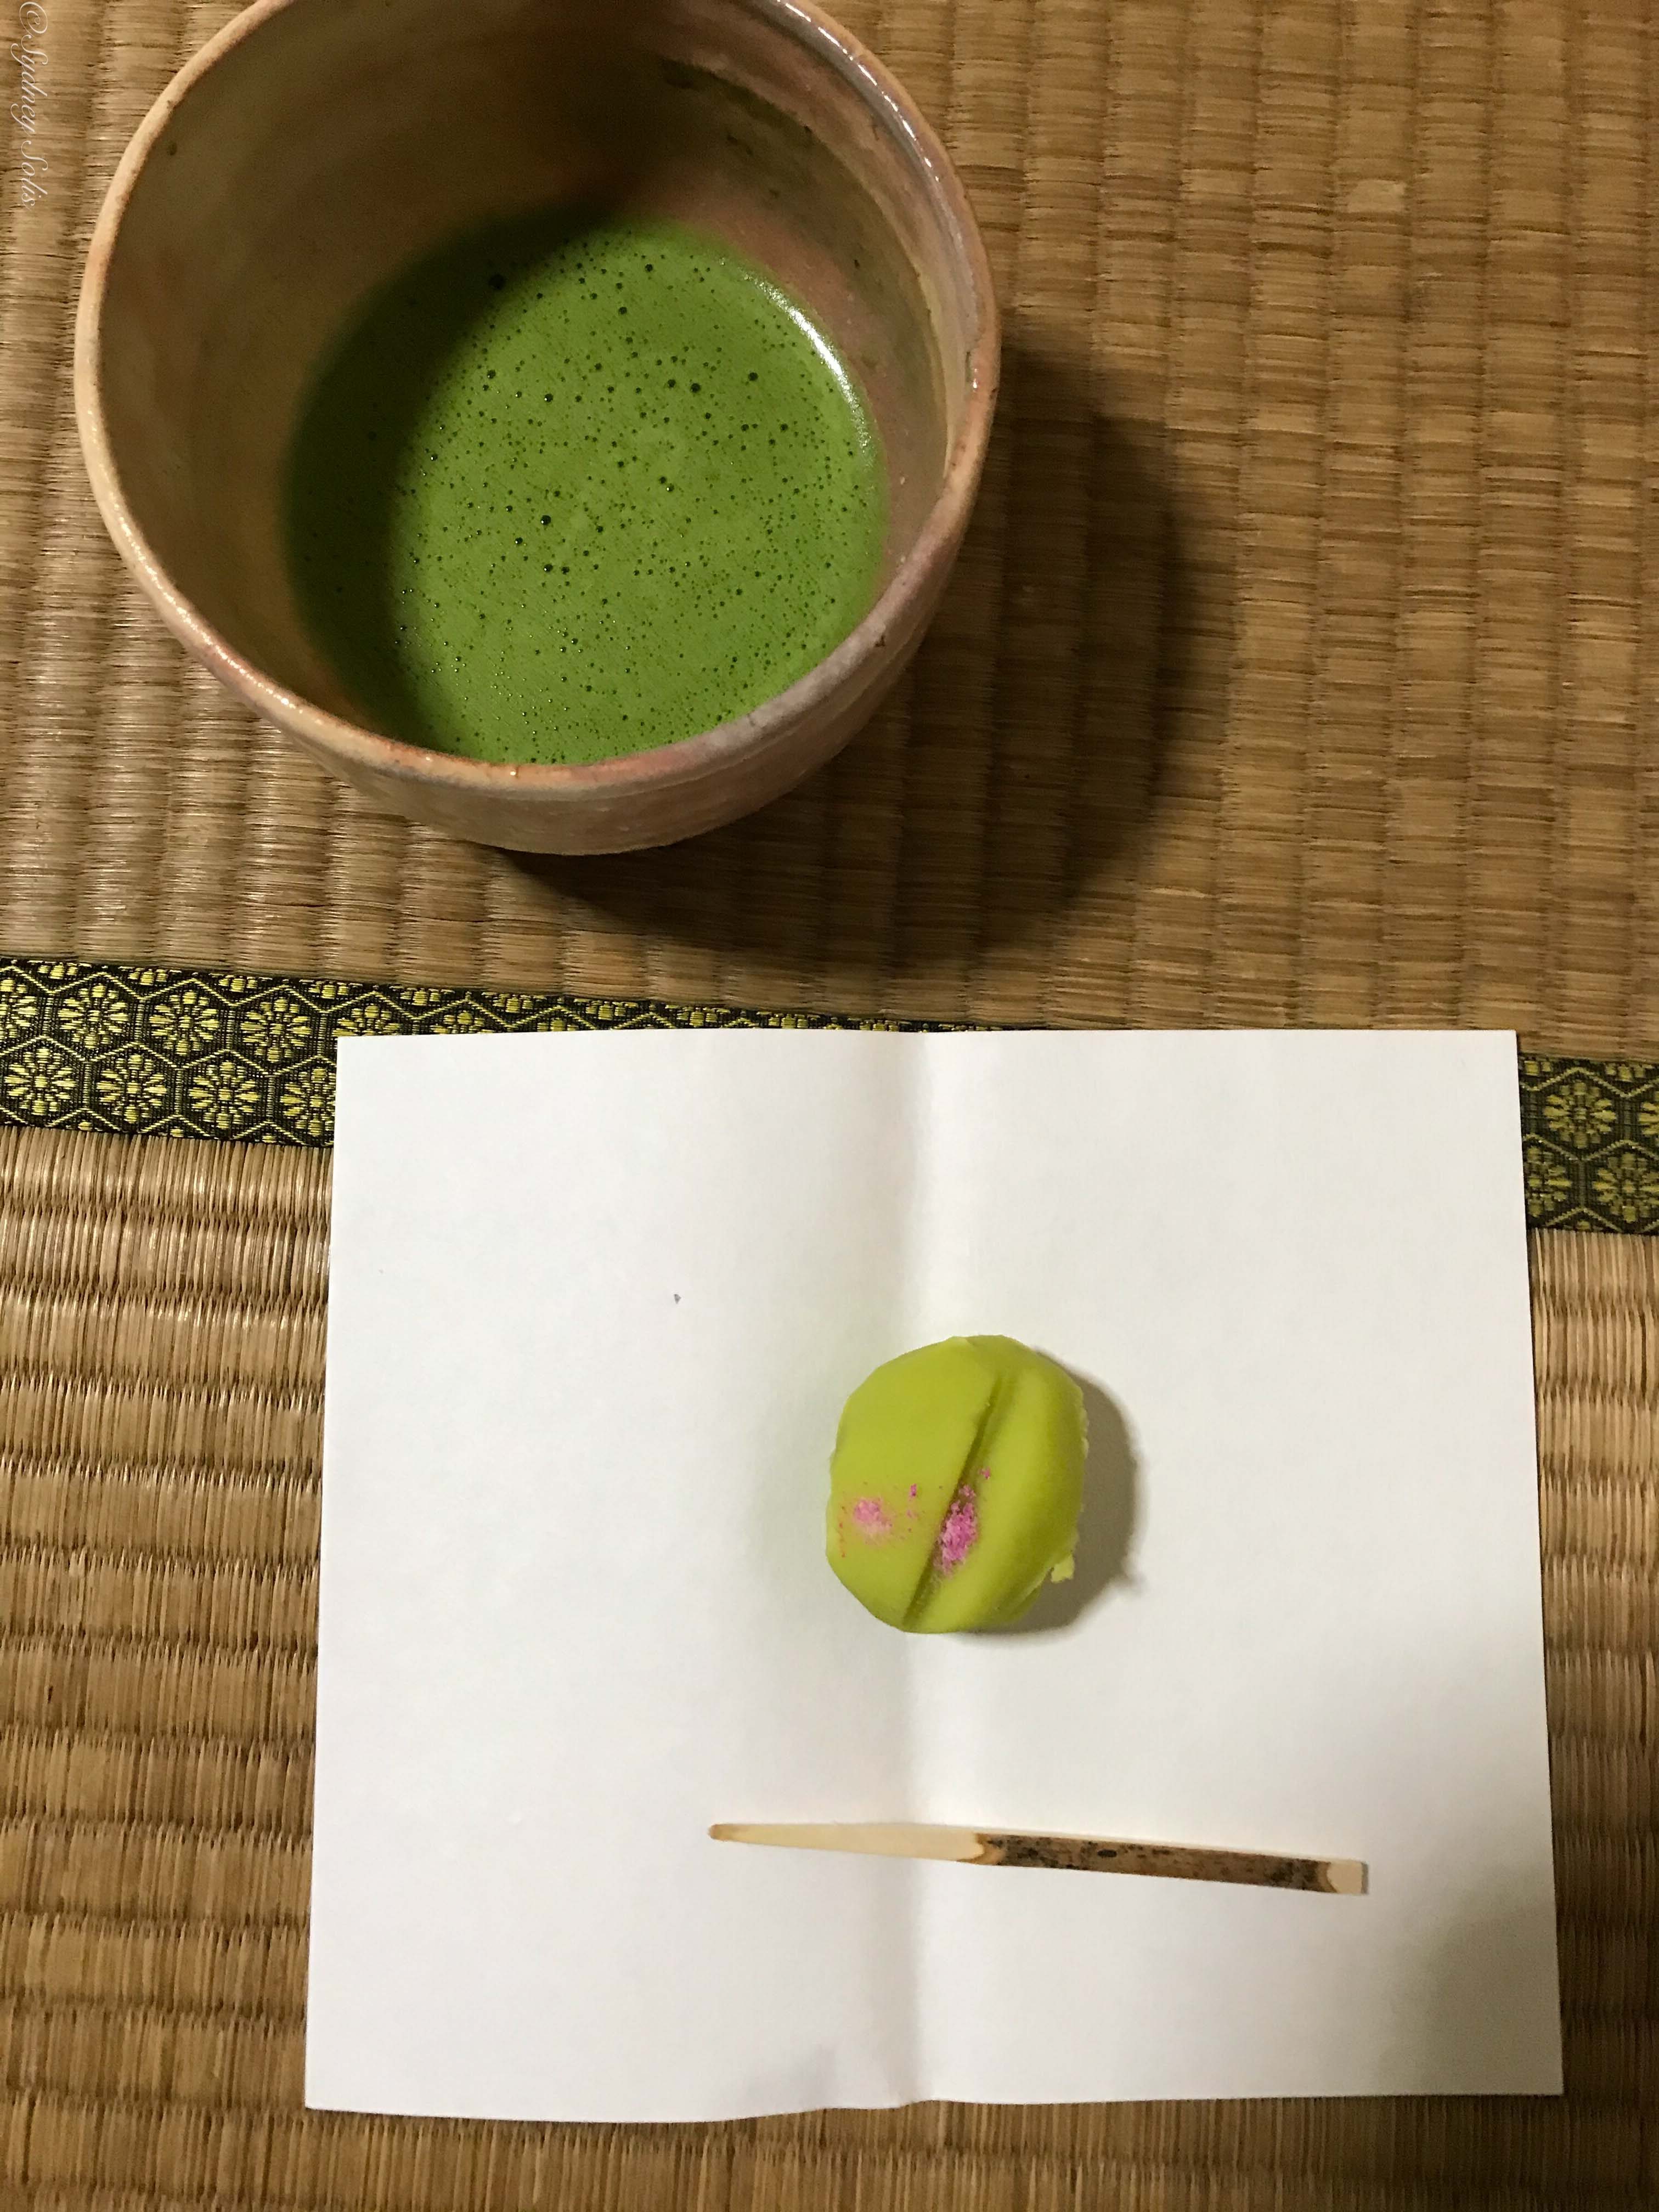 Matcha and wagashi in Osaka, Japan. 